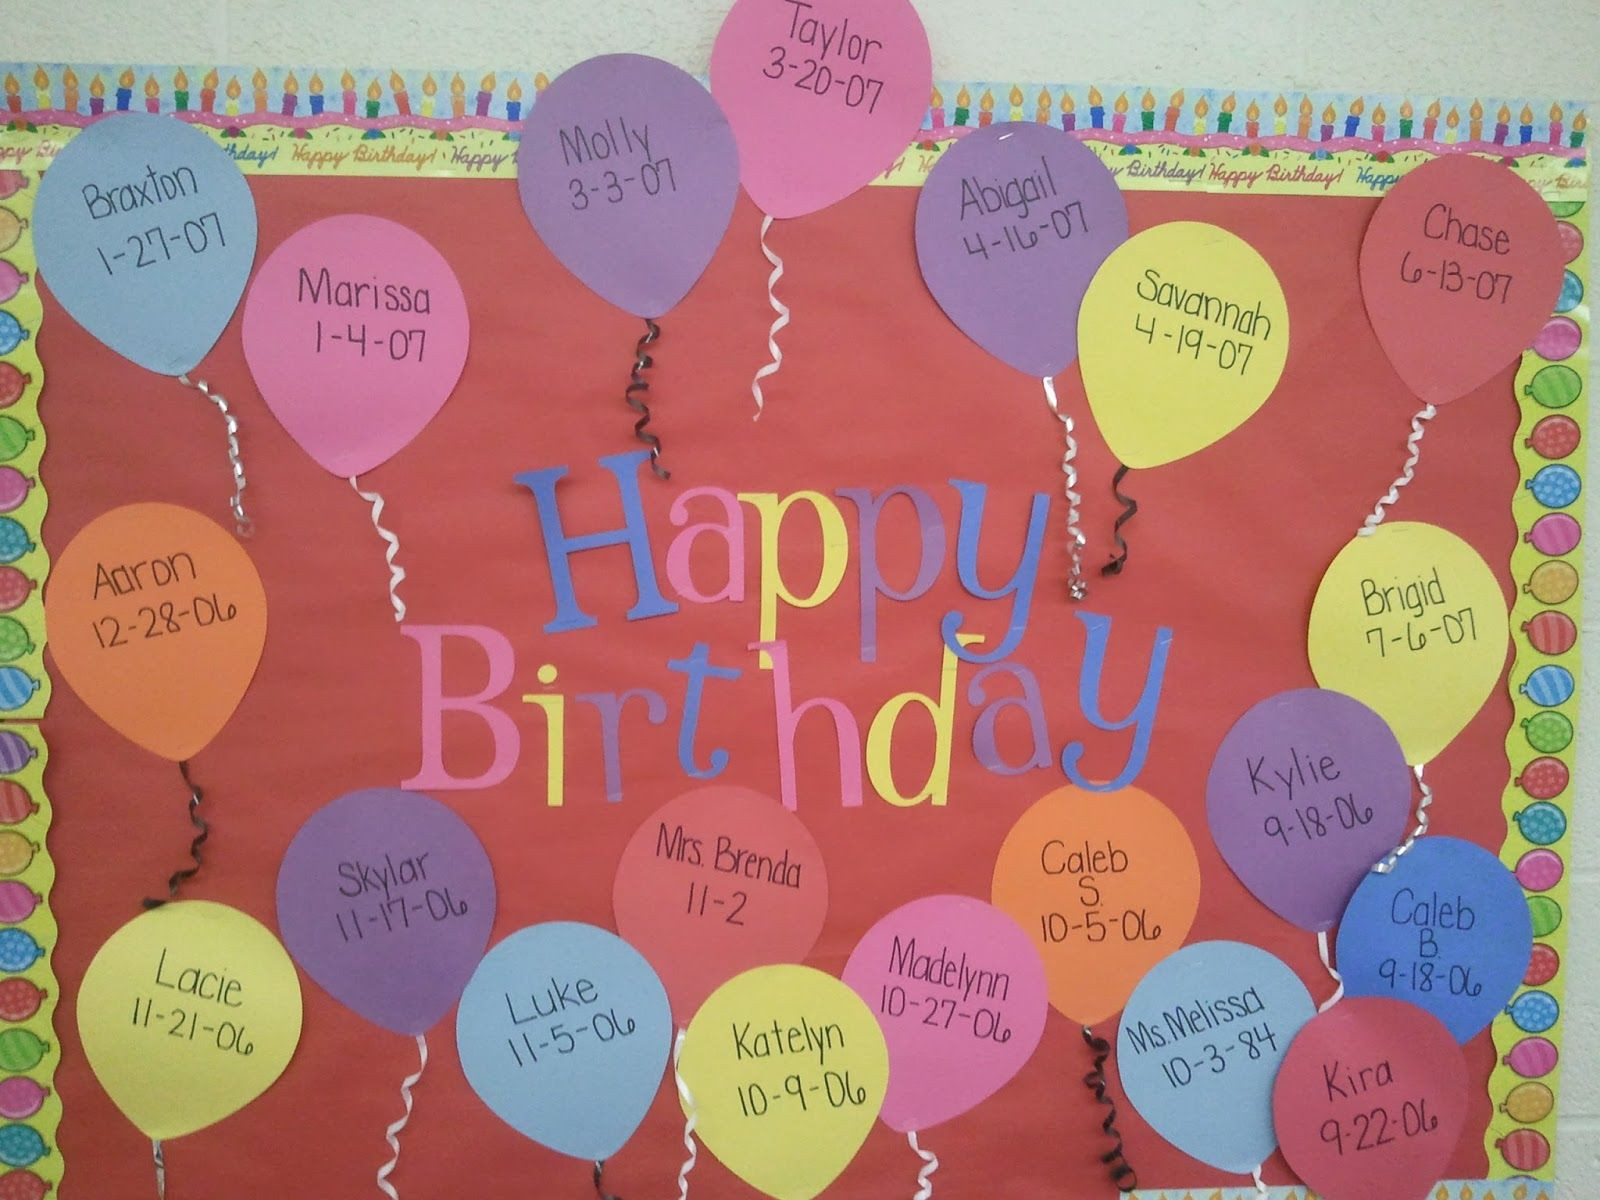 Best ideas about Birthday Board Ideas
. Save or Pin fall birthday bulletin board ideas Now.